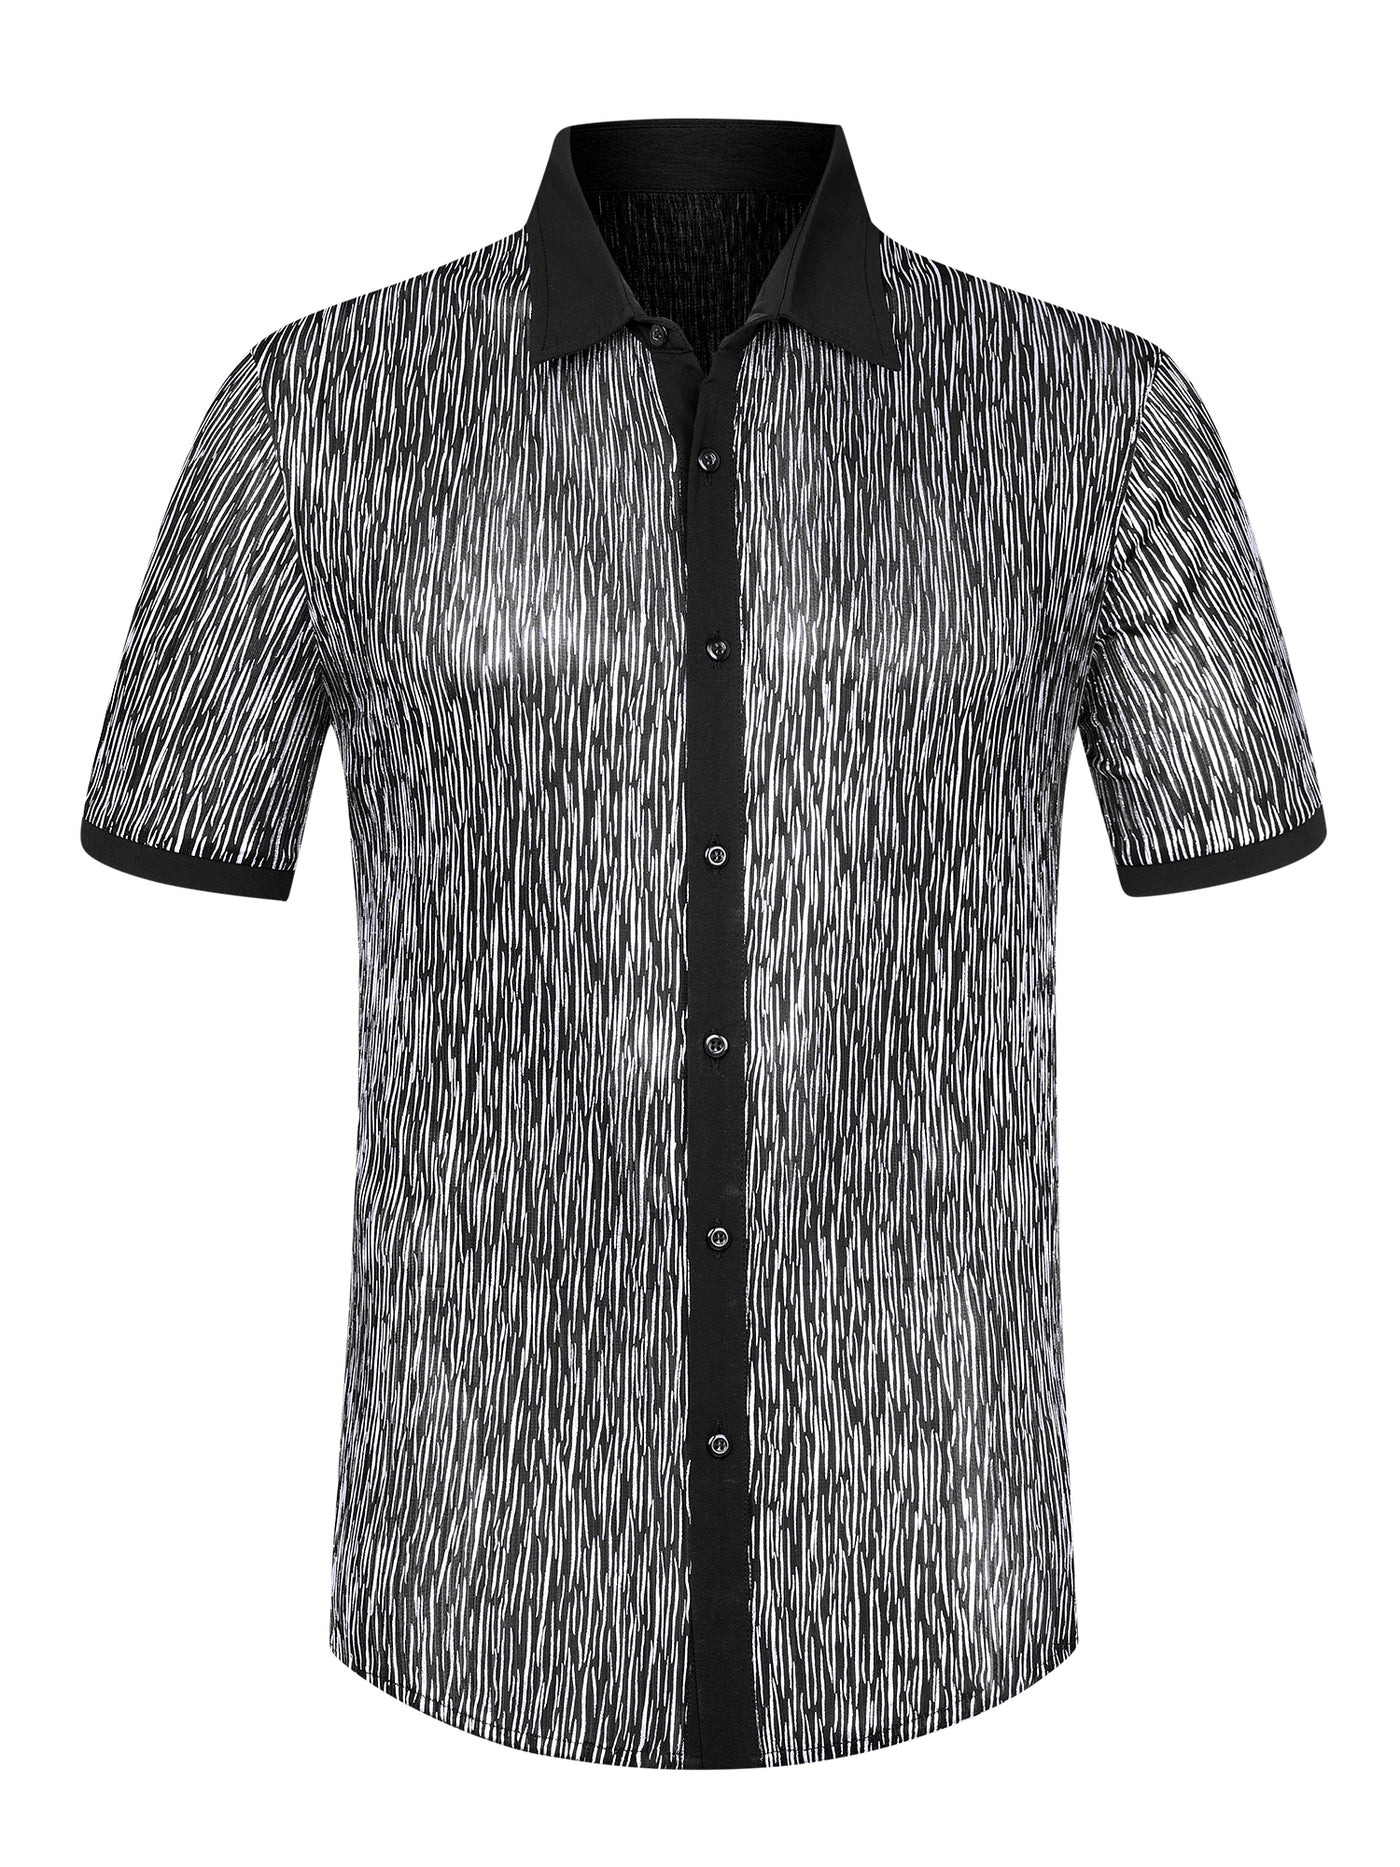 Bublédon Men's Metallic Contrasting Color Short Sleeves Button Down Disco Party Sparkly Shirt